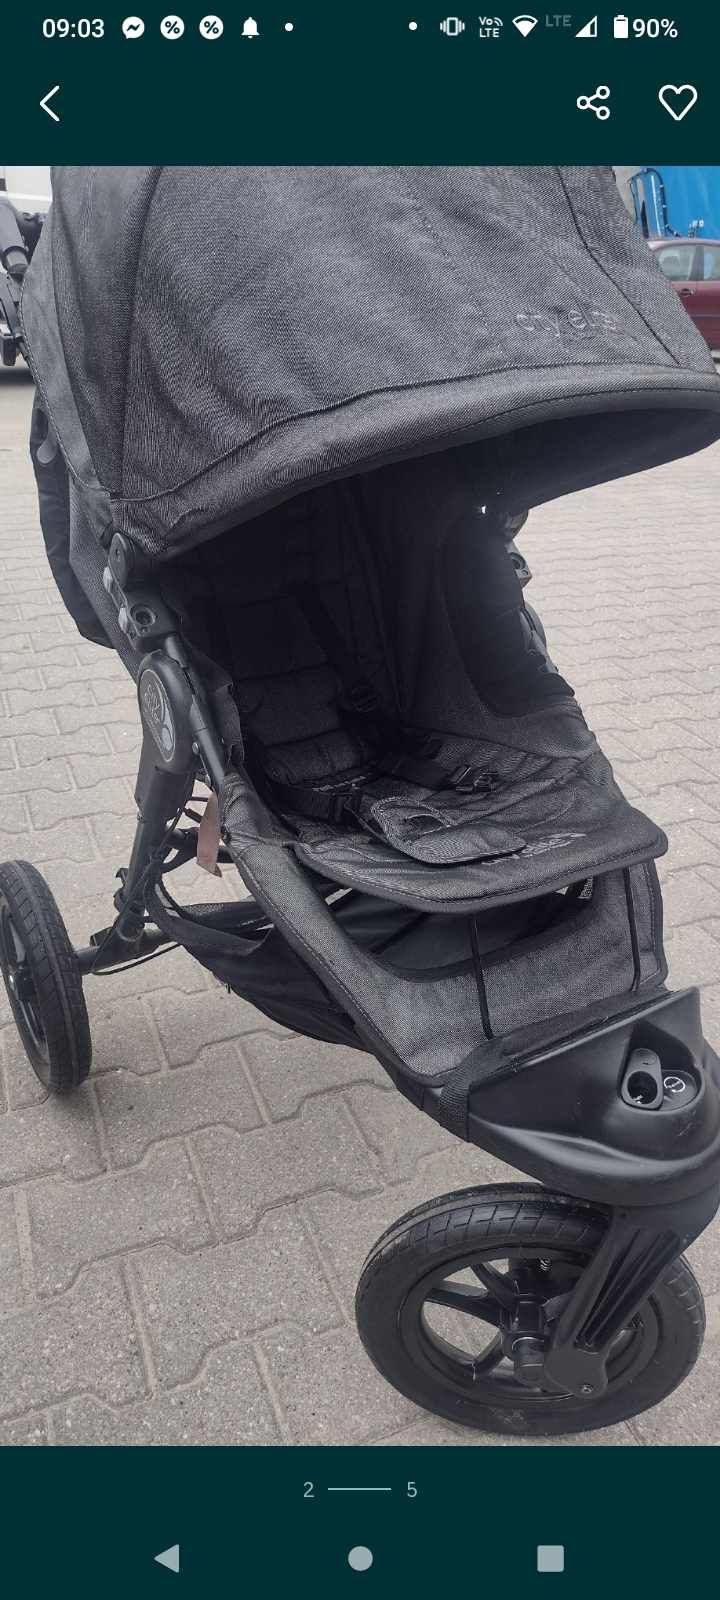 Sprzedam wózek Baby Jogger City Ellite